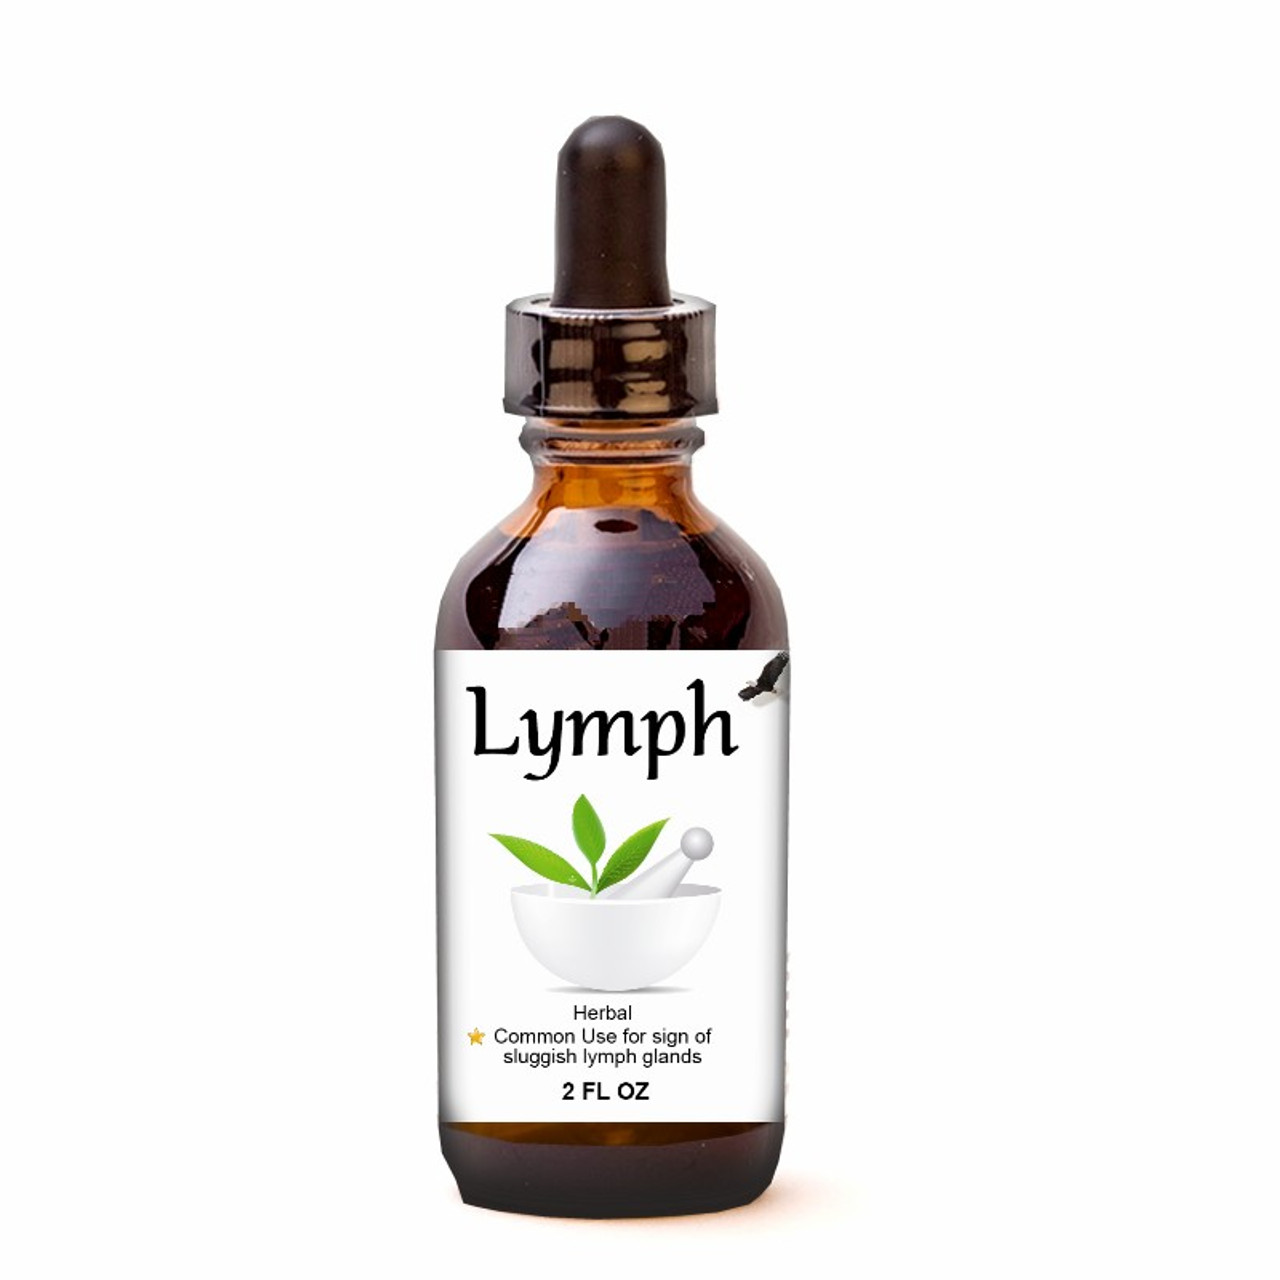 Lymph Herbal Remedy